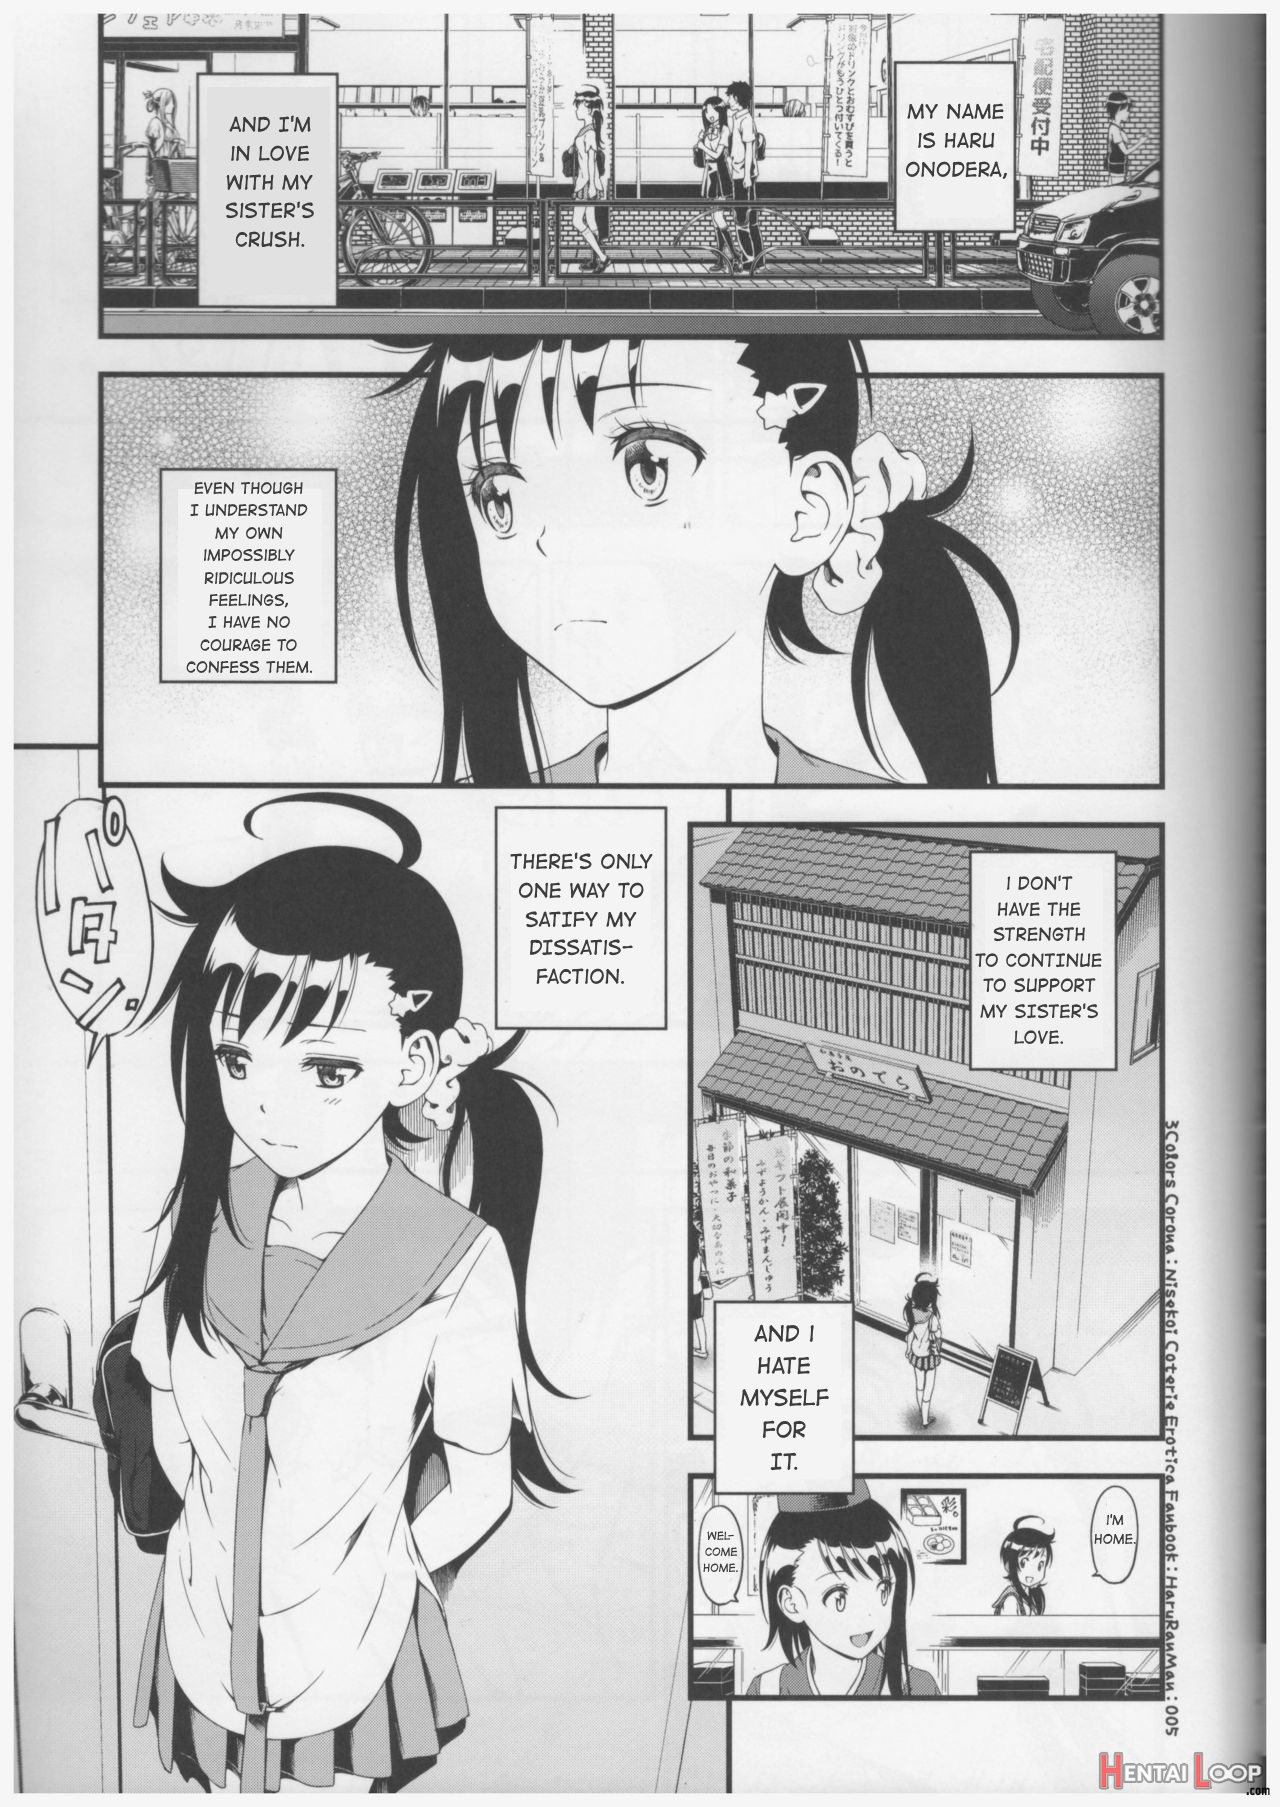 Haru In Full Bloom page 4